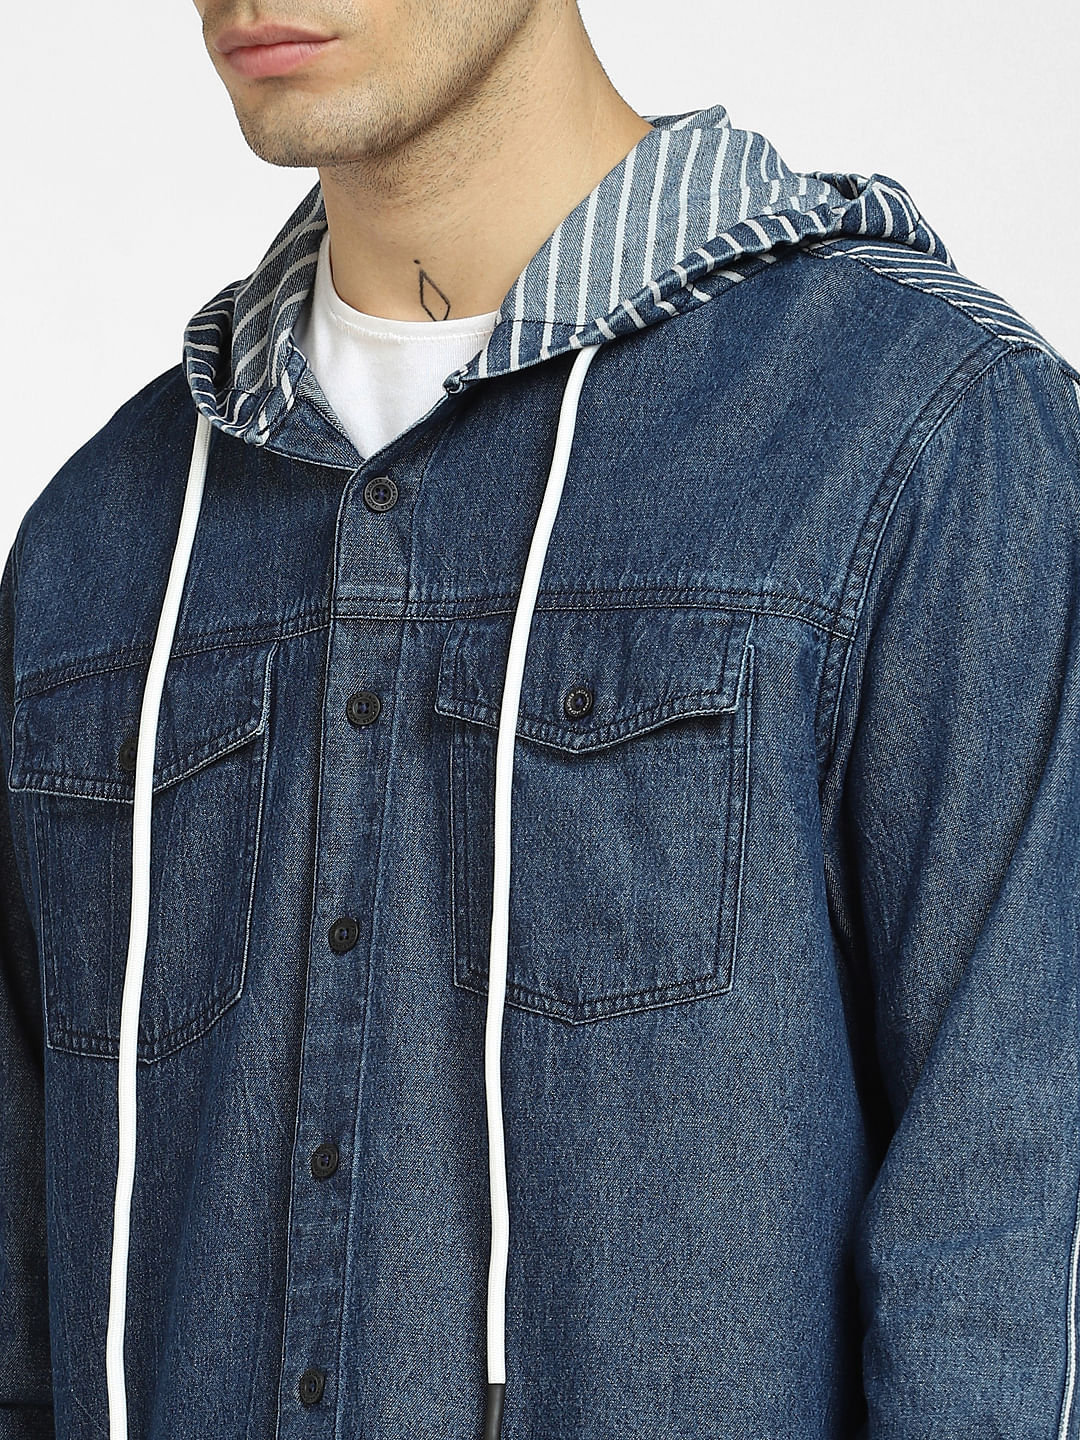 Supreme Eat the Rich Denim Hooded Shirt FW14 Size Medium Blue Light Jean  Jacket | eBay